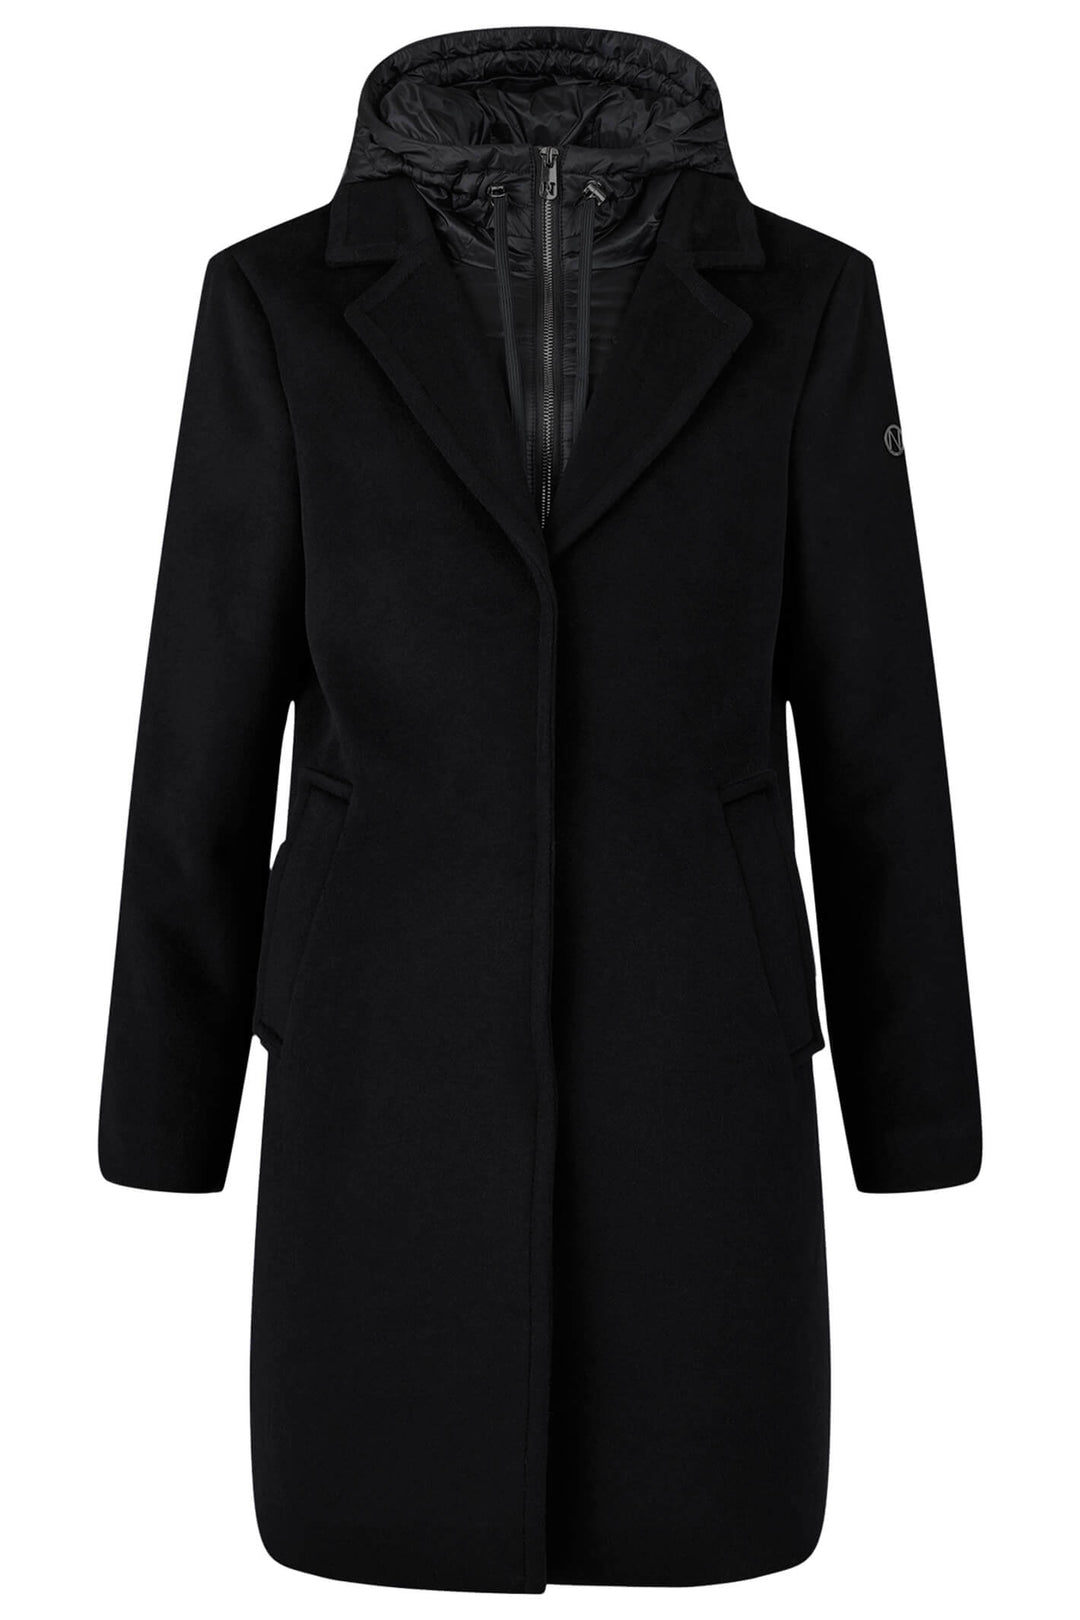 Normann 7723-55-90 Black Padded Back Coat - Olivia Grace Fashion